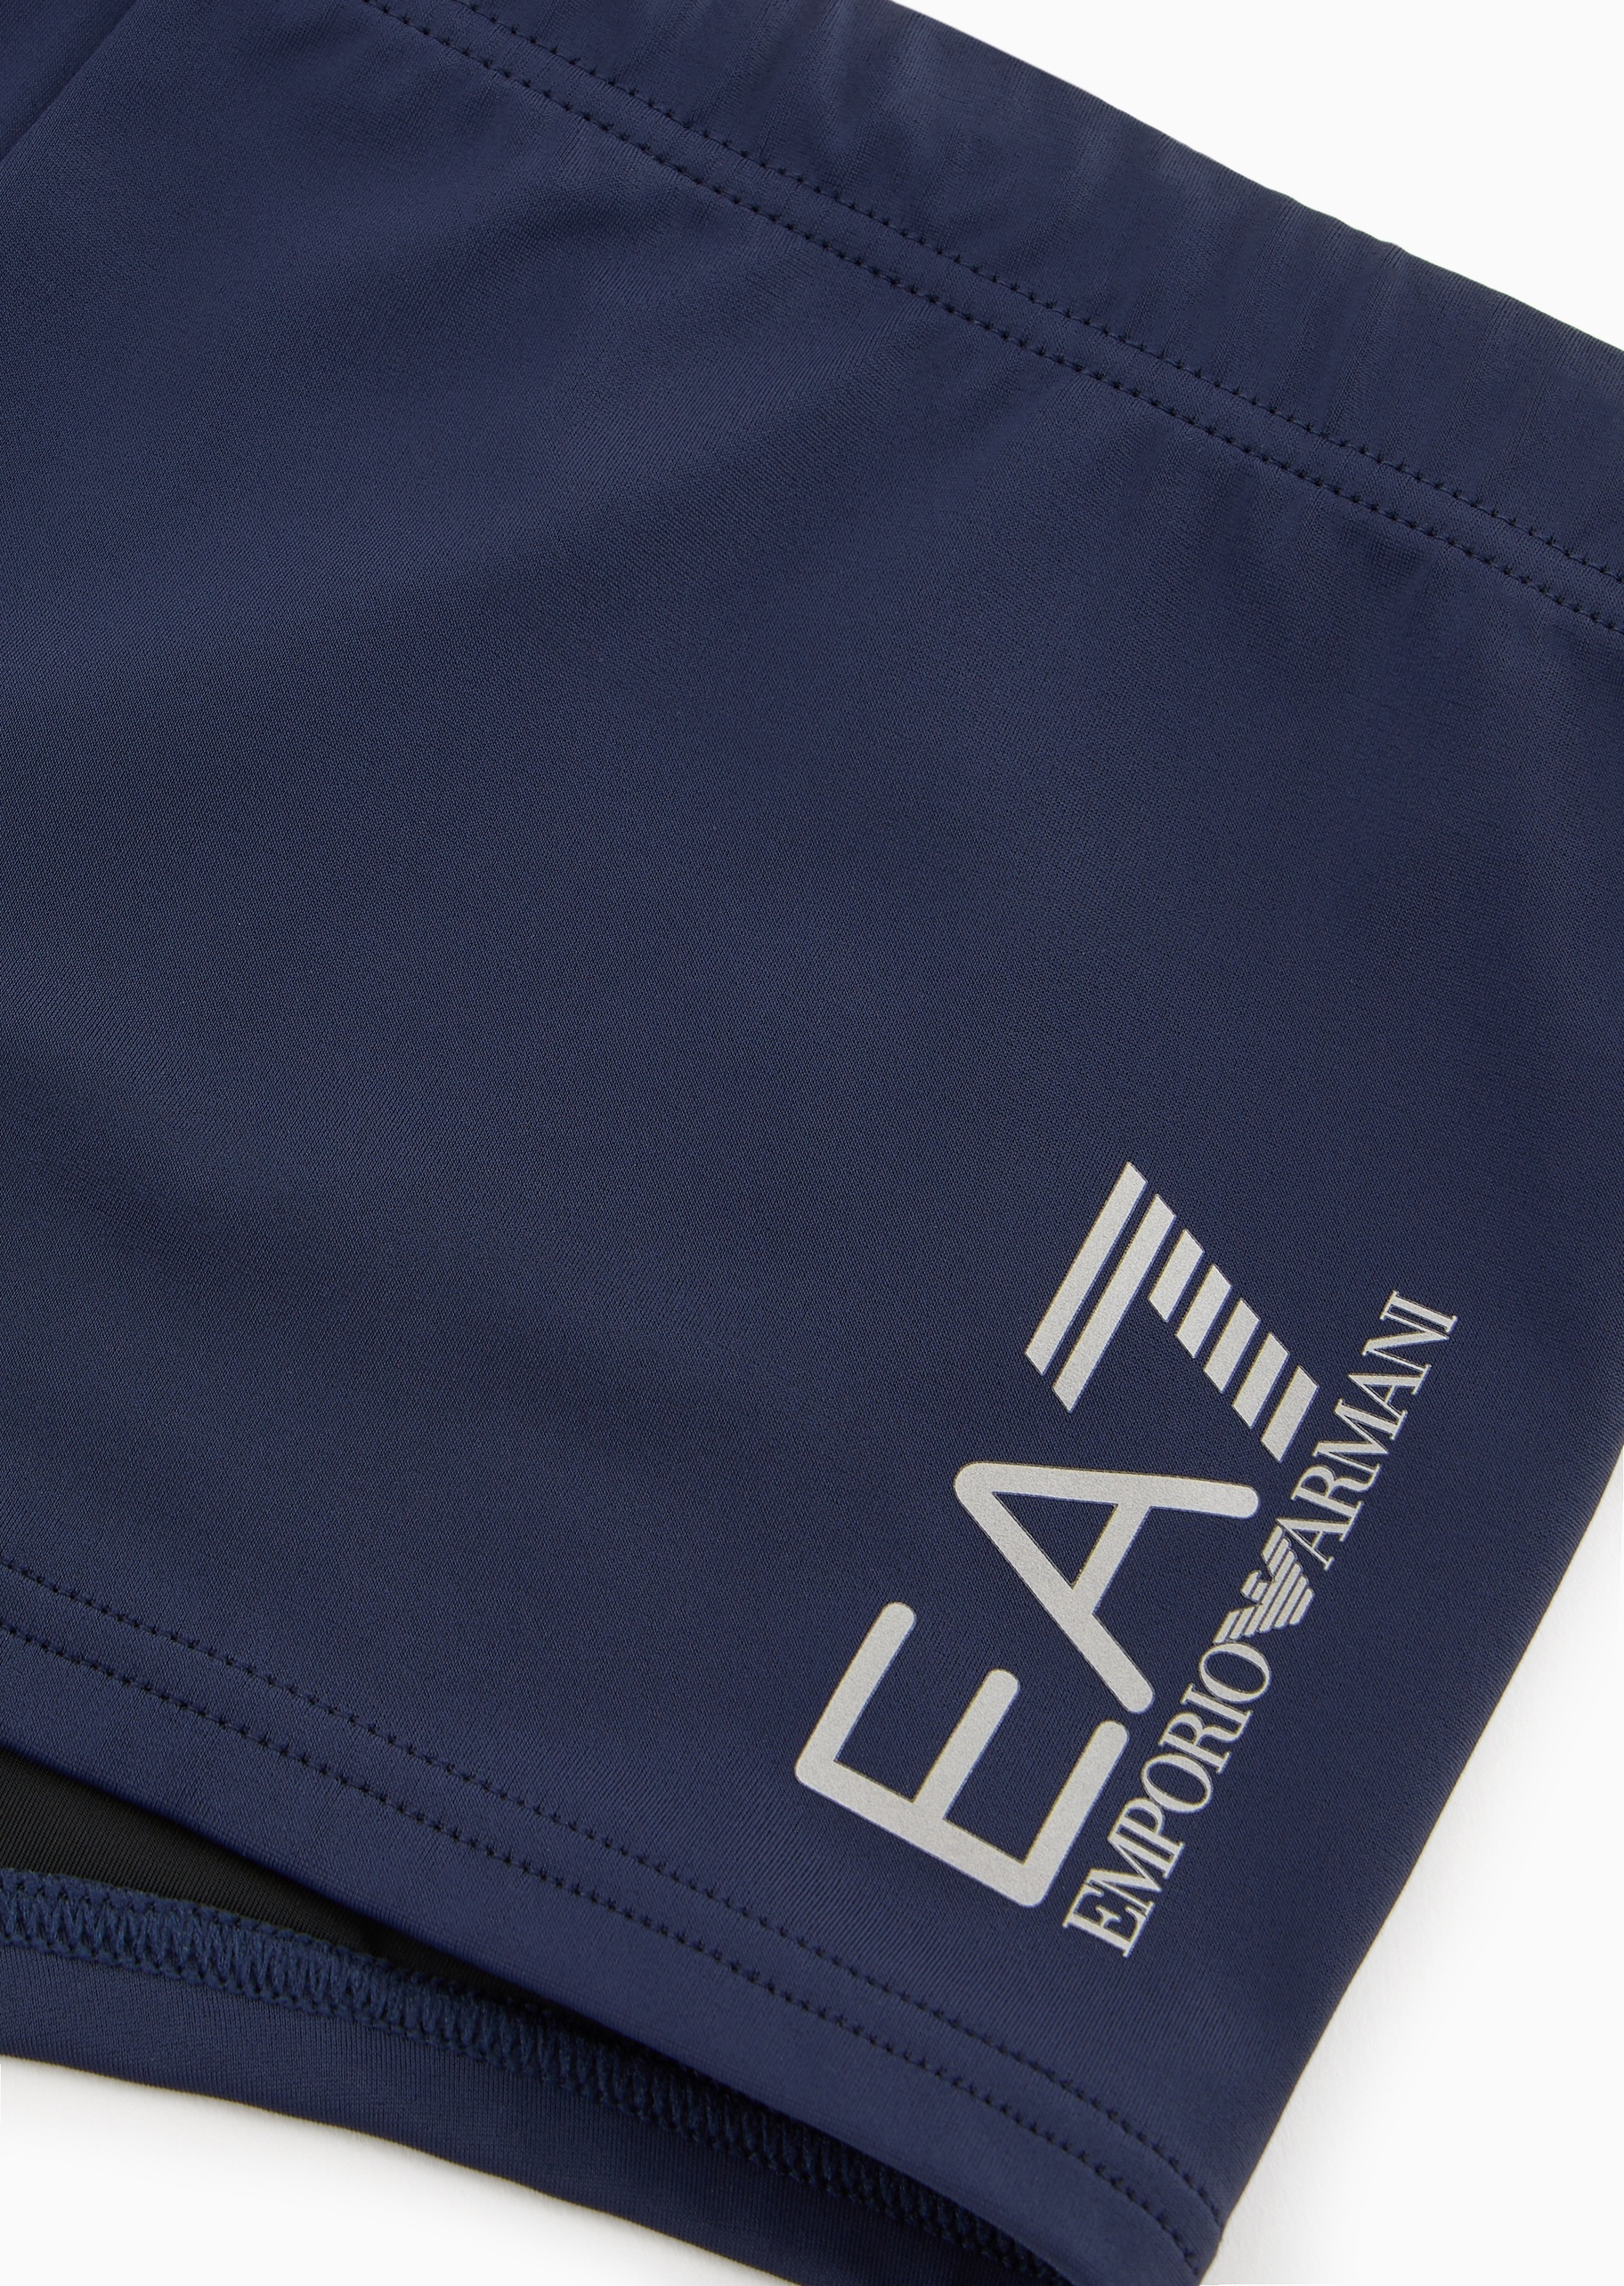 EA7 男士弹力合身松紧腰短款印花运动泳裤